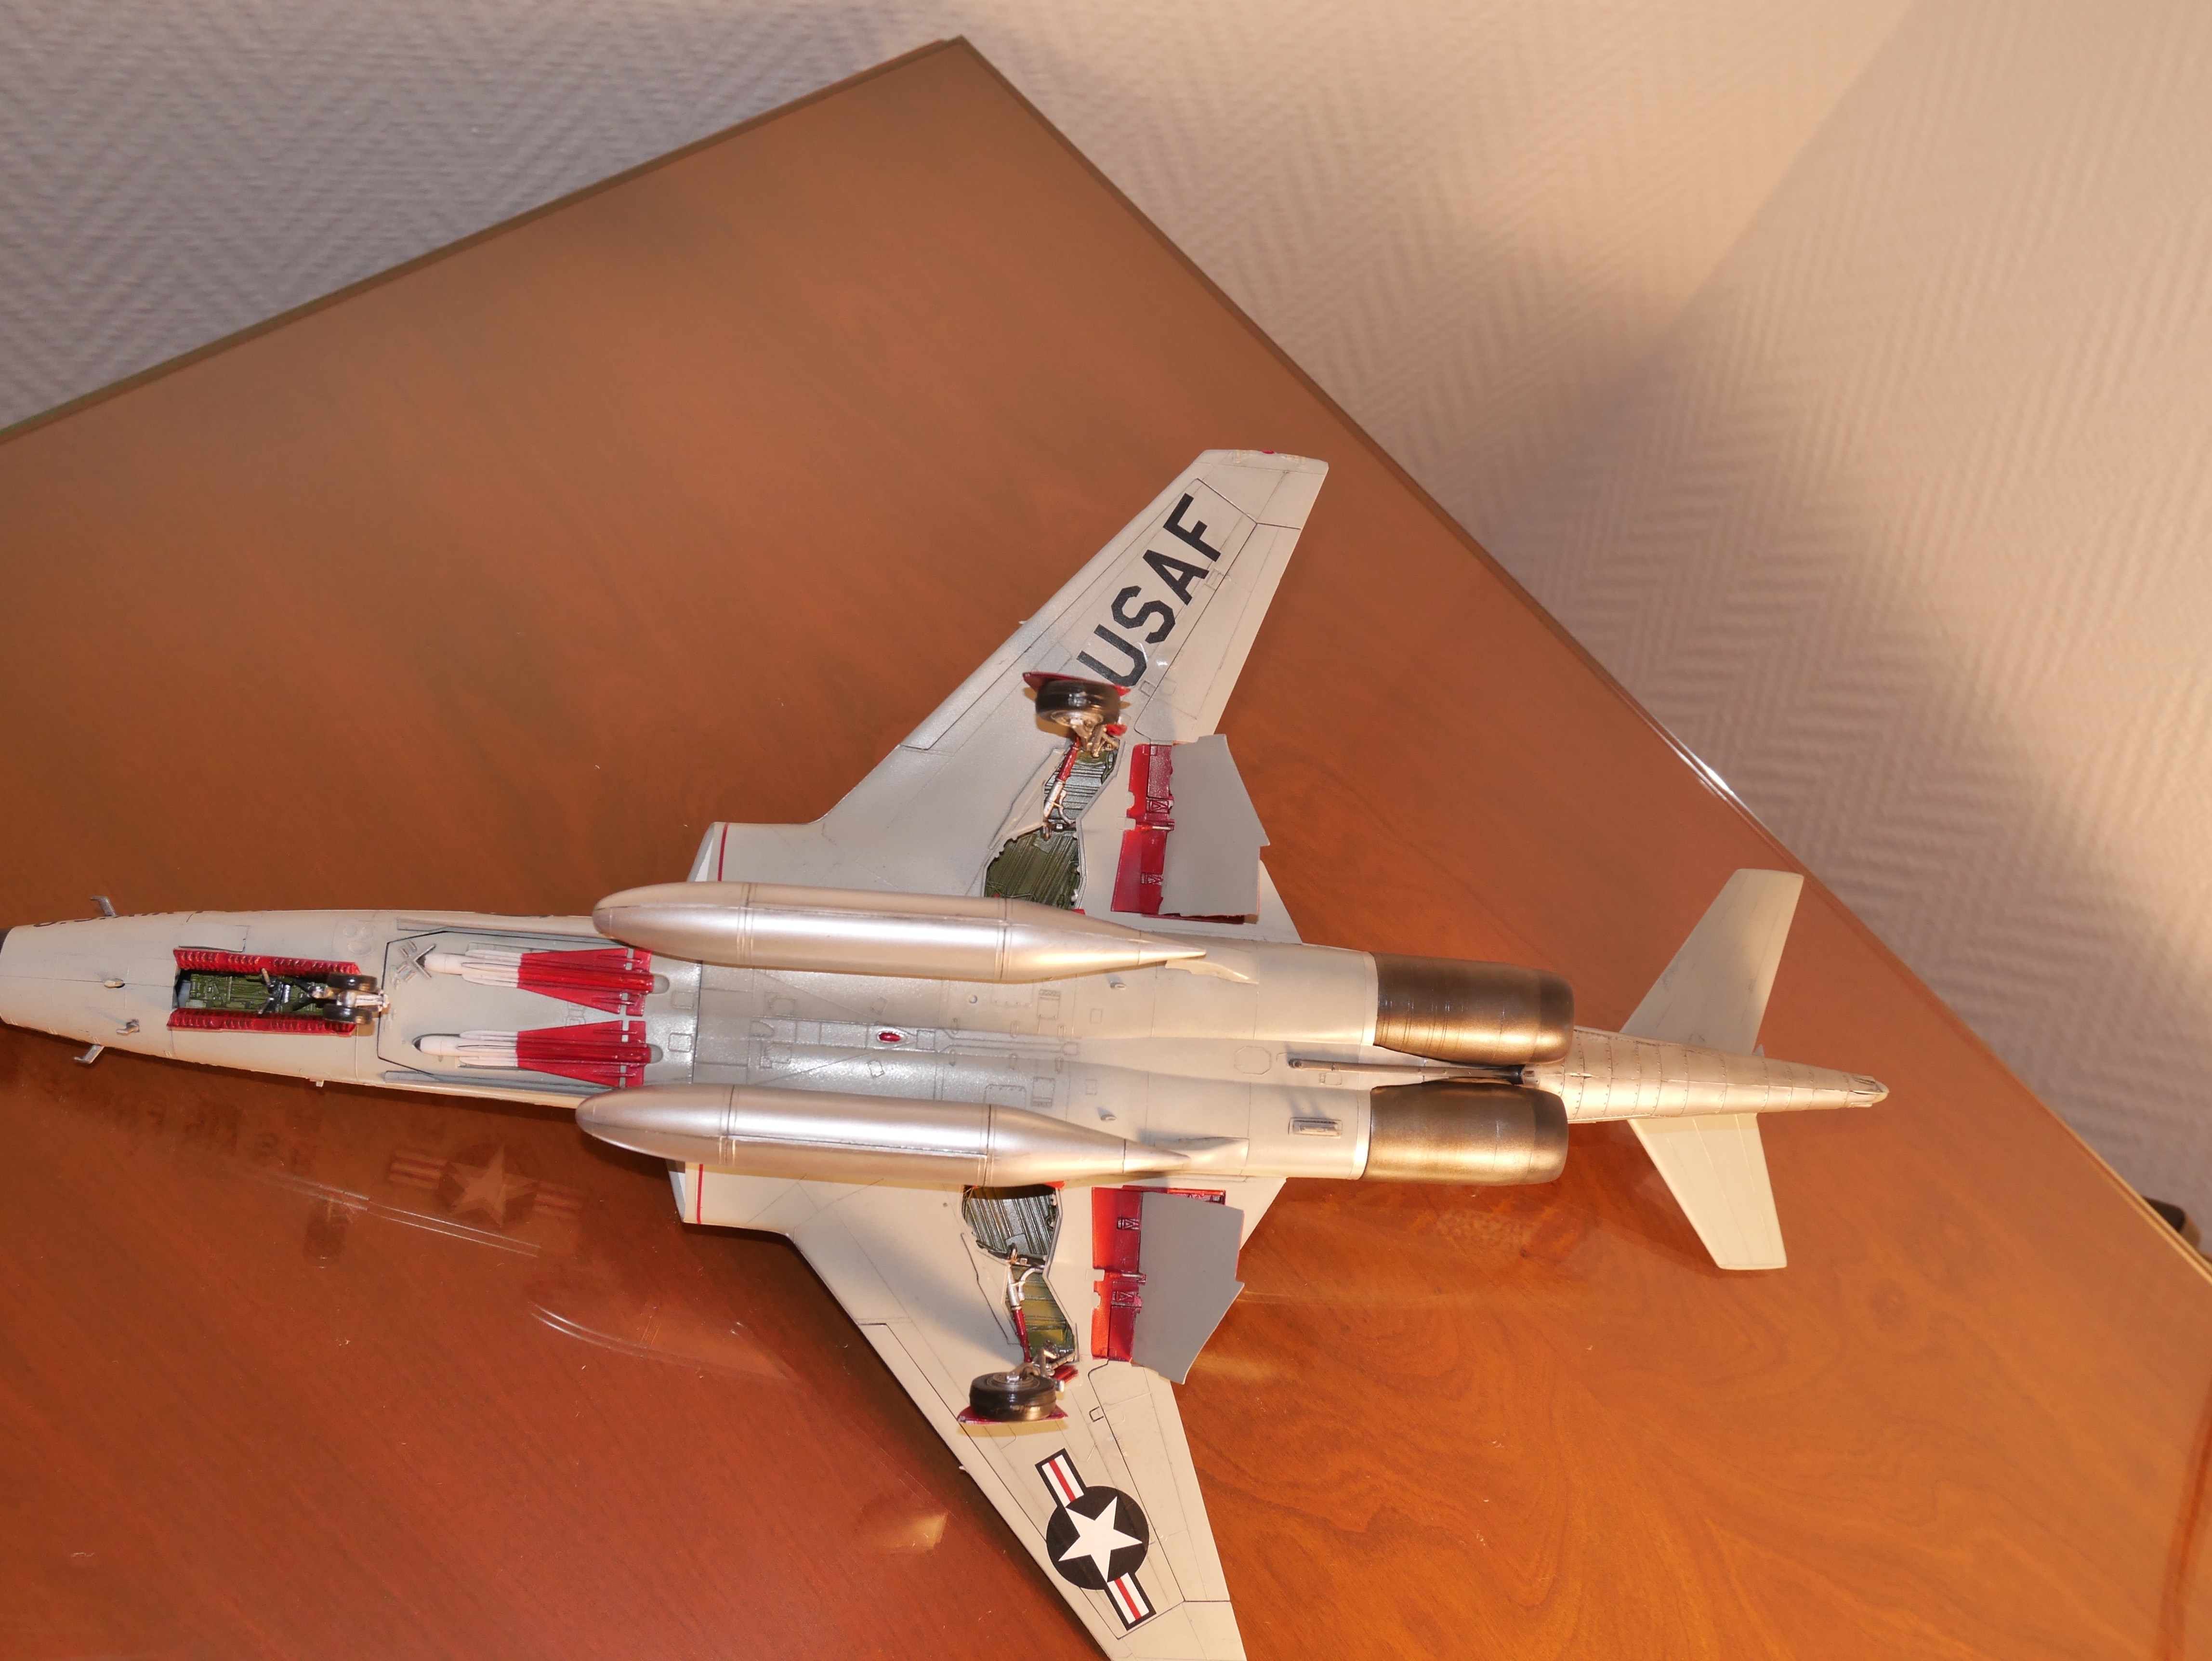  McDonnell F-101B Voodoo - Monogram 16121411090919107014707950